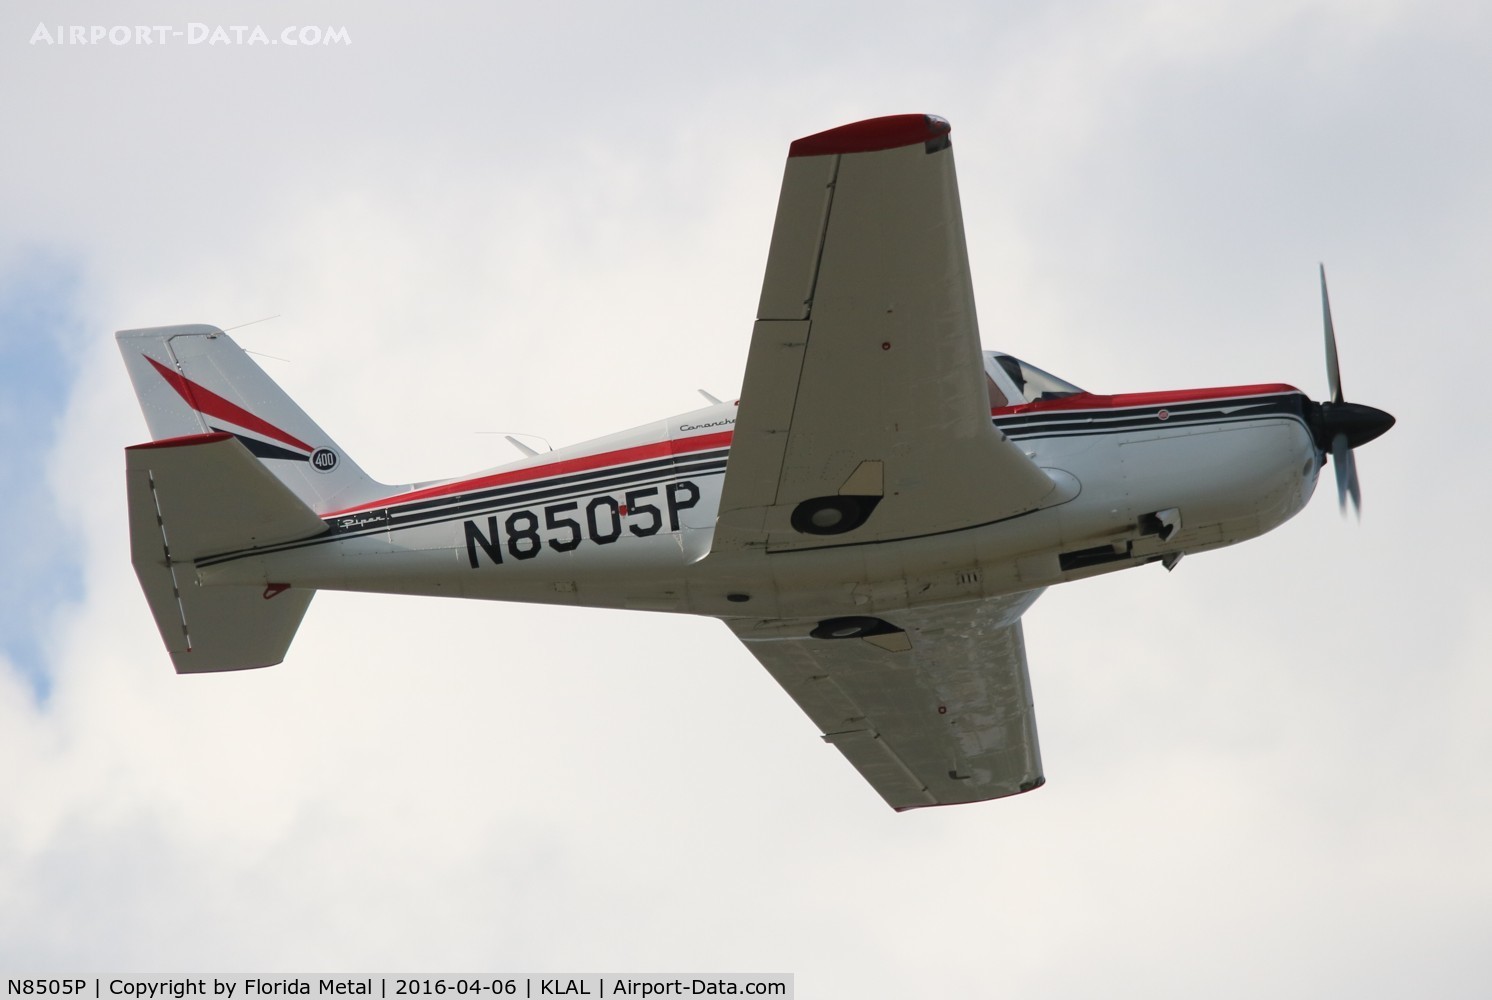 N8505P, 1964 Piper PA-24-400 Comanche 400 C/N 26-85, SNF LAL 2016